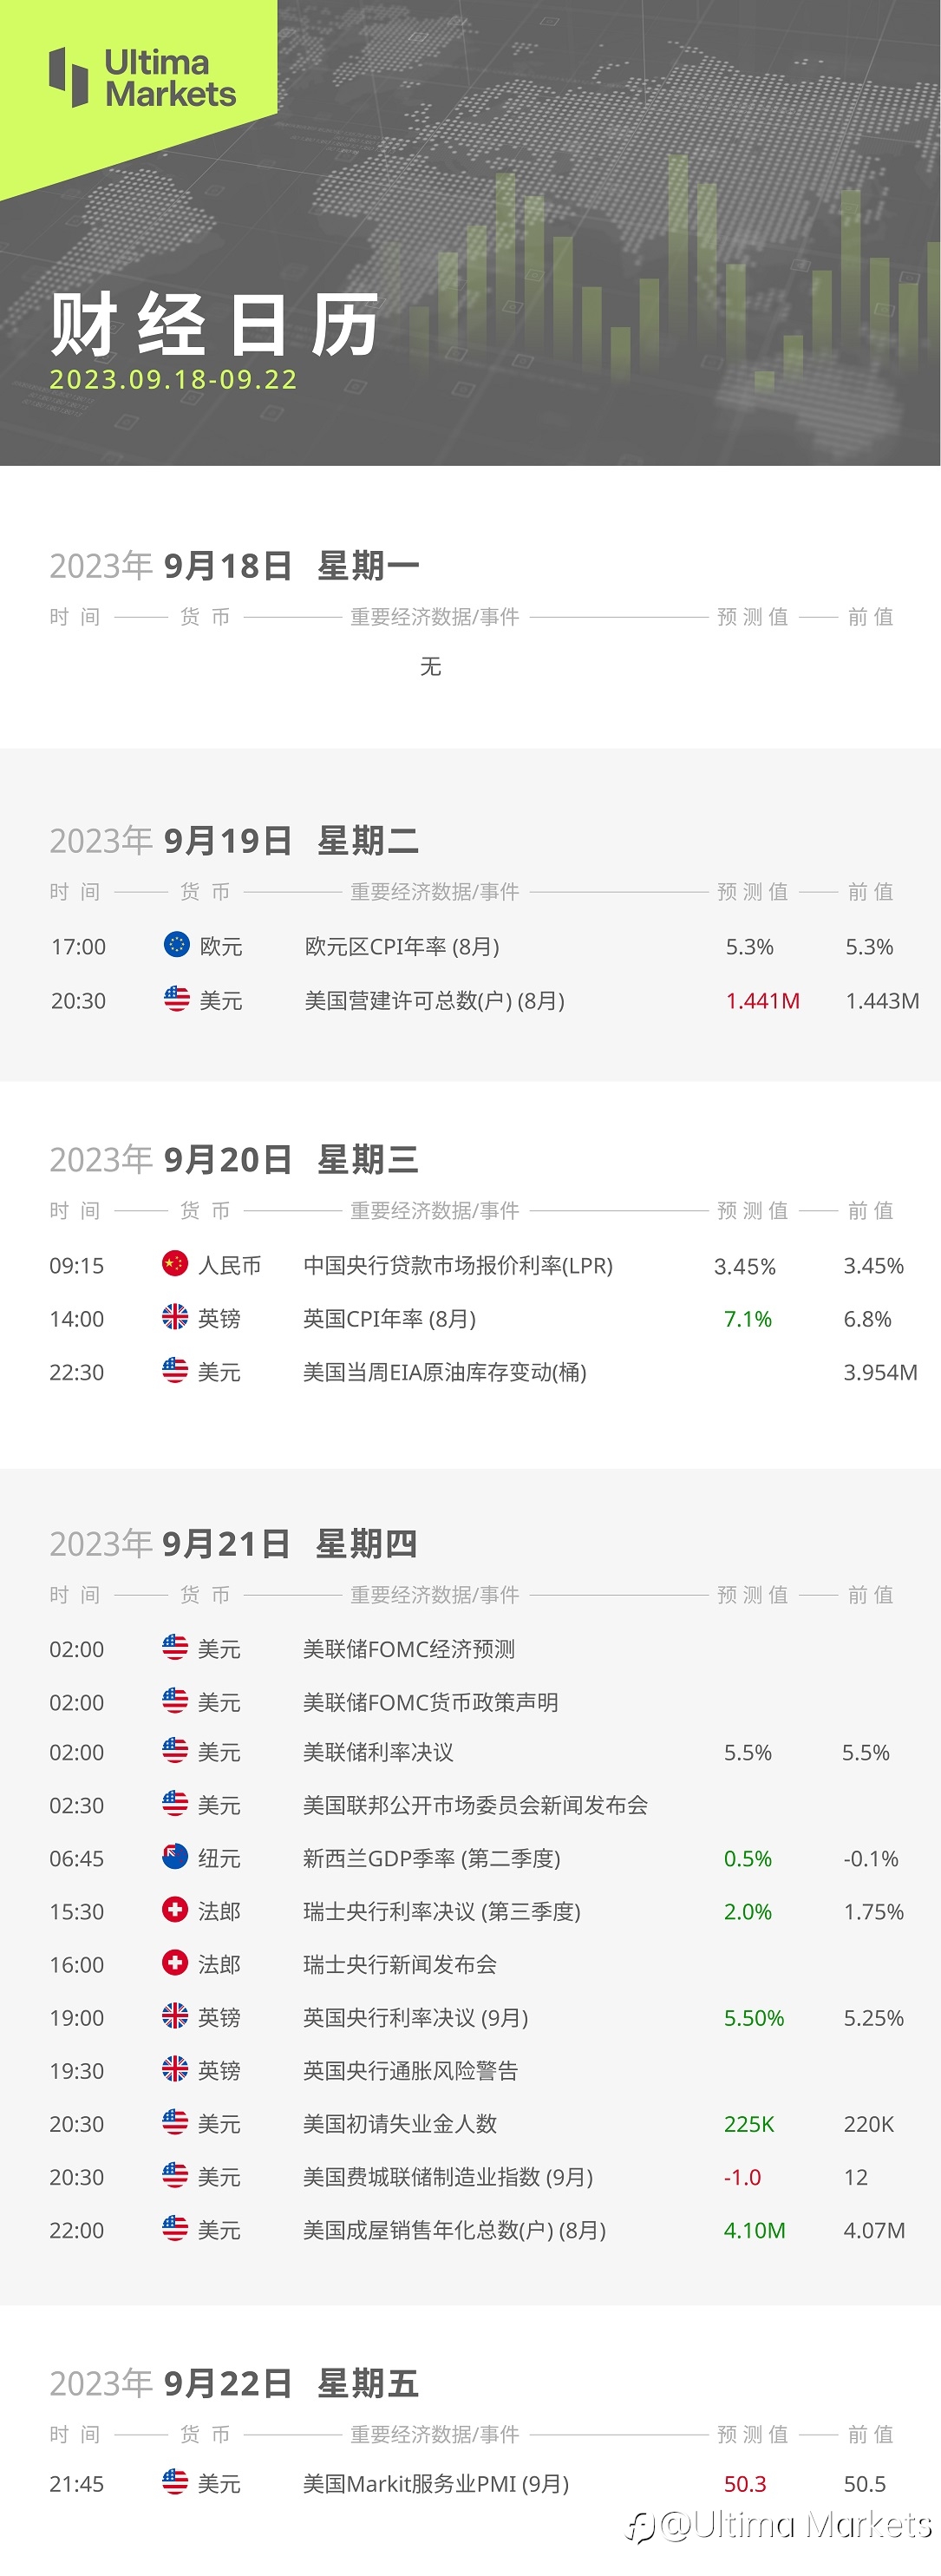 Ultima Markets：【本周财经日历】2023.09.18- 09.22